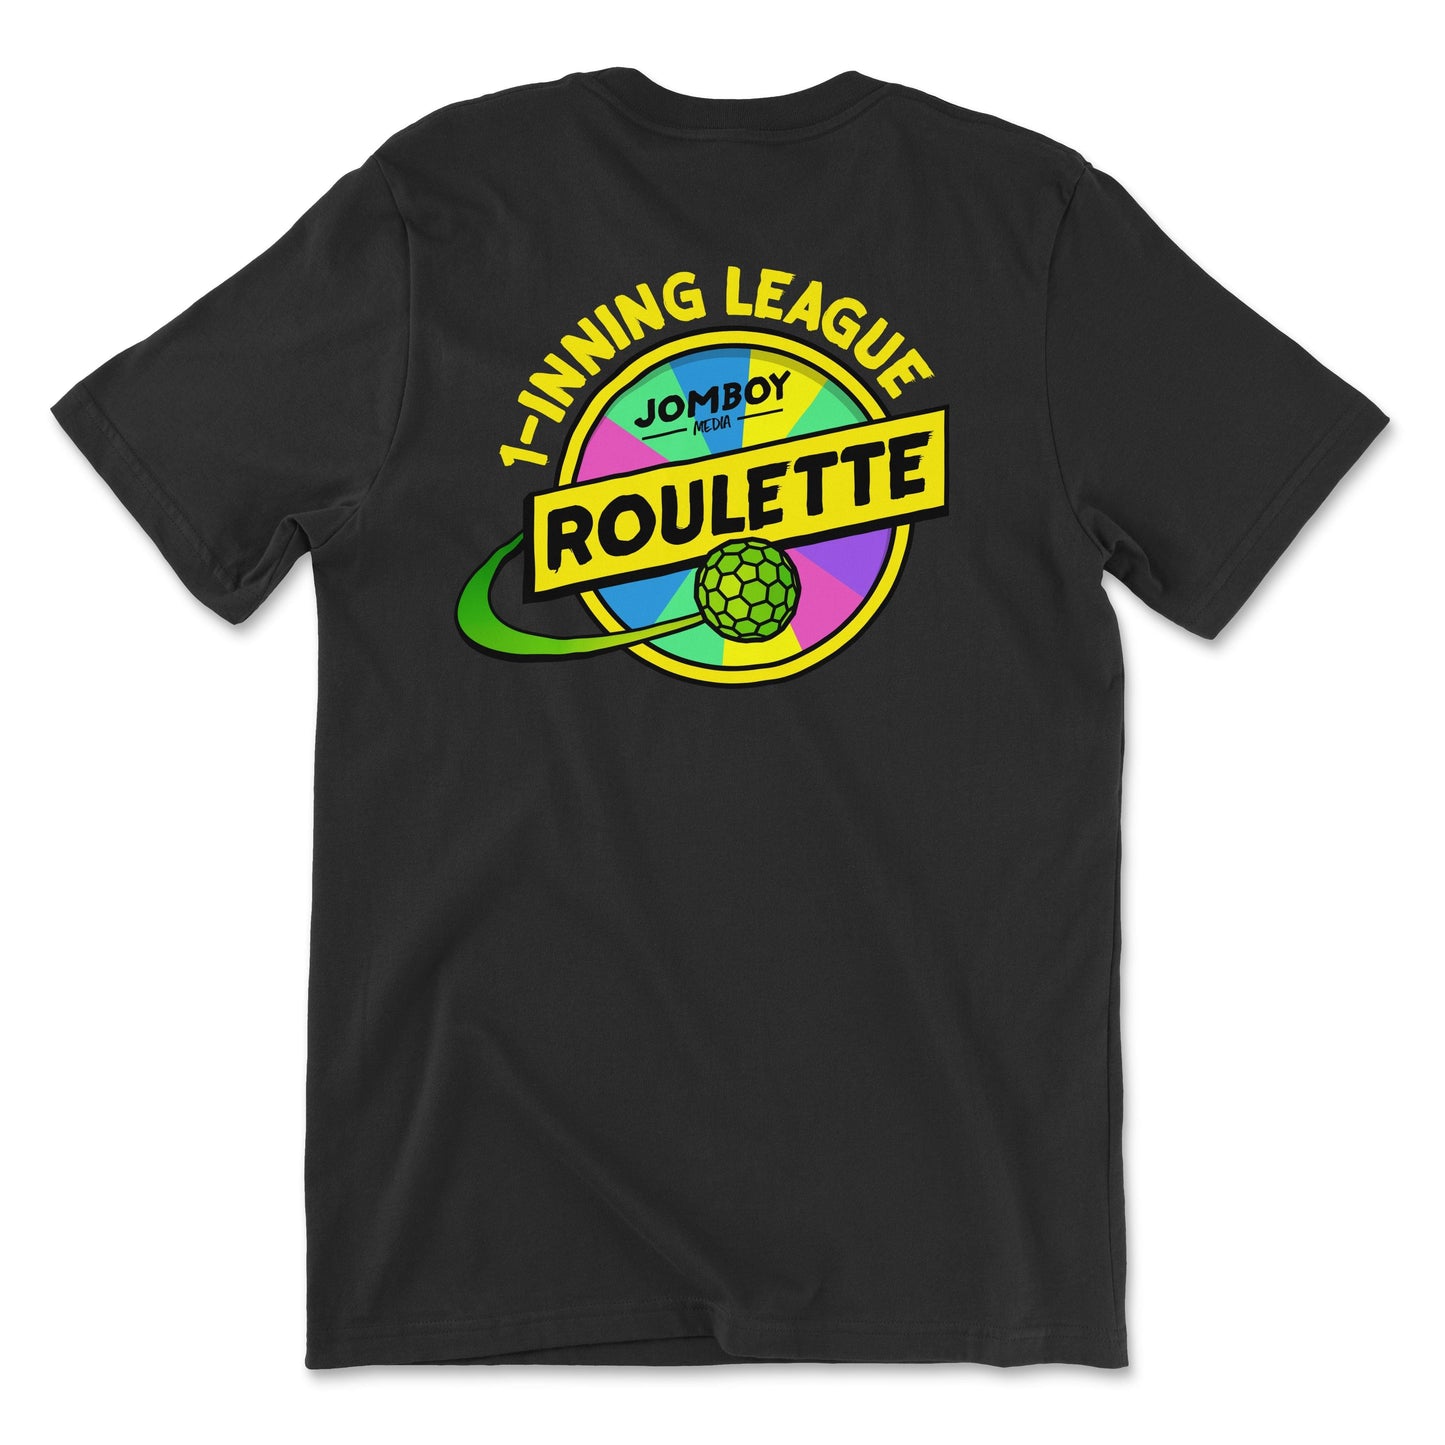 1-Inning League Roulette | T-Shirt